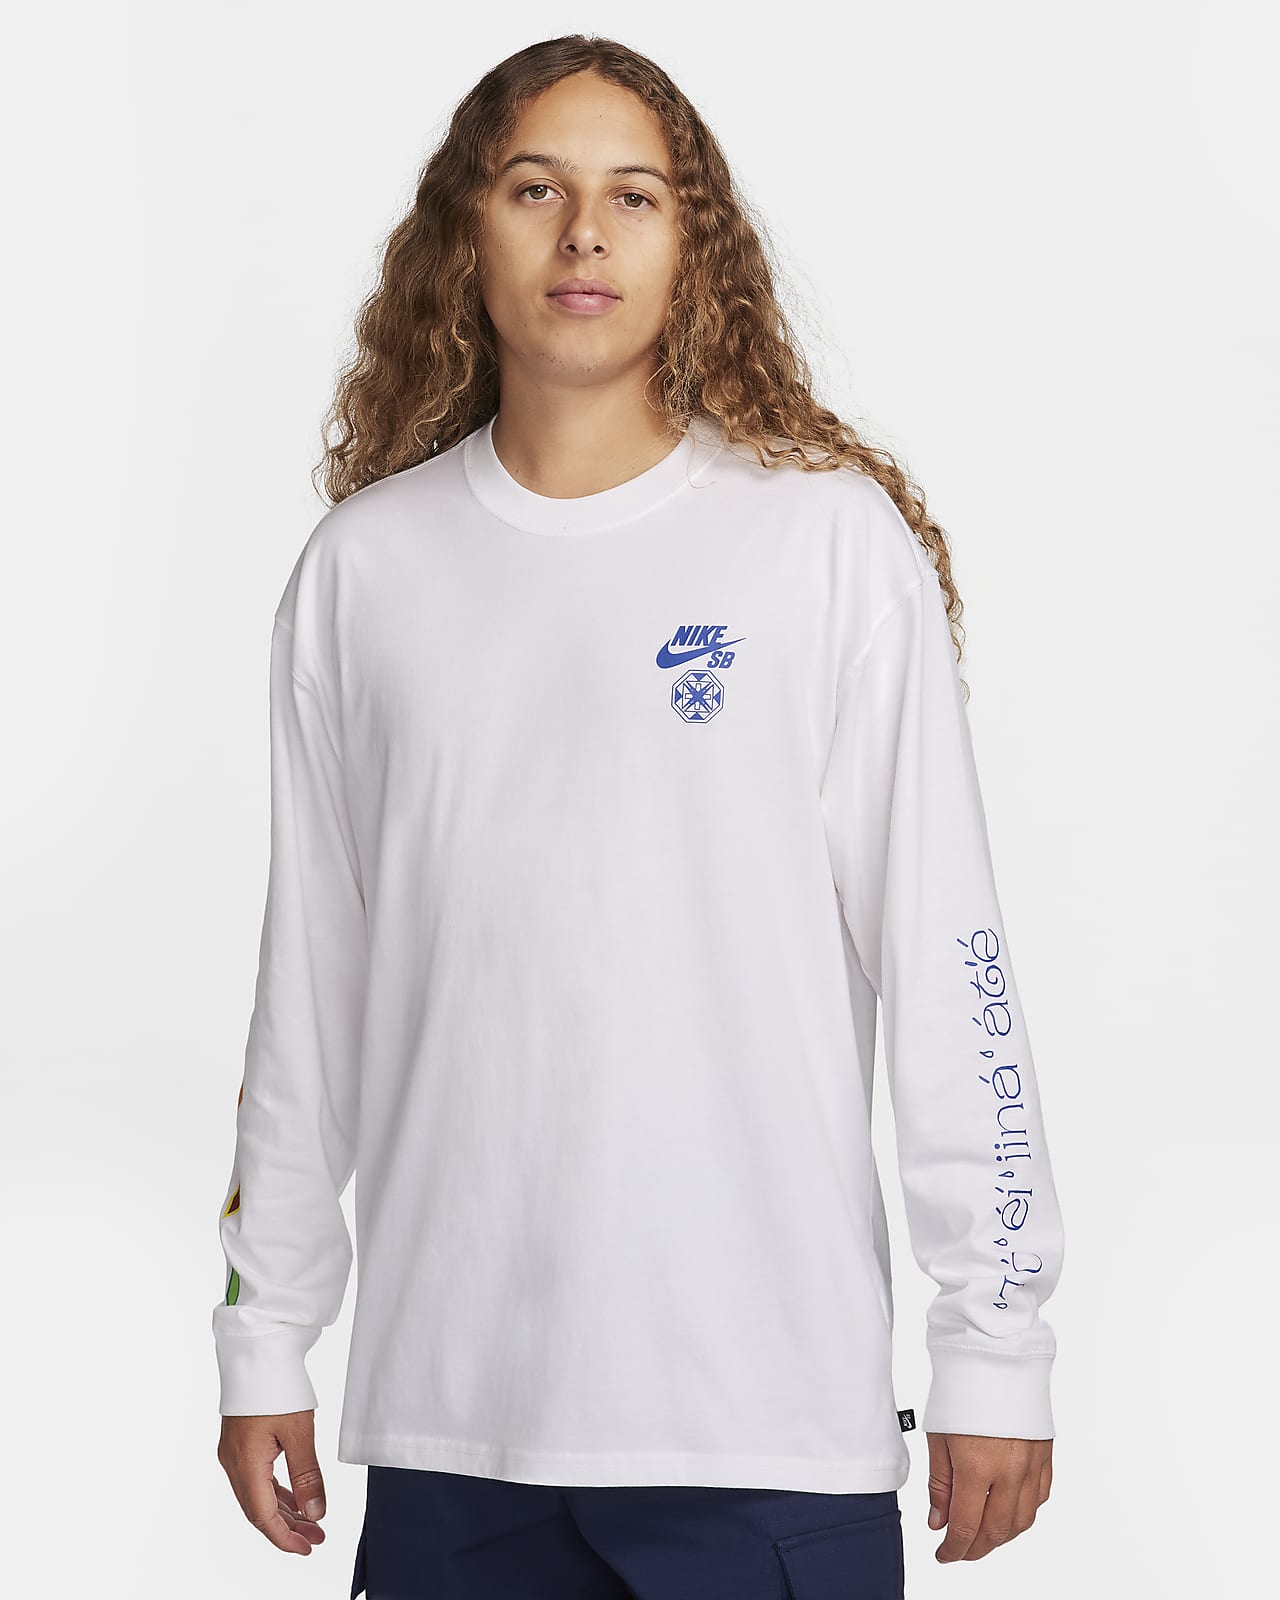 Nike SB x Di'Orr Greenwood Long-Sleeve Max90 Skate T-Shirt